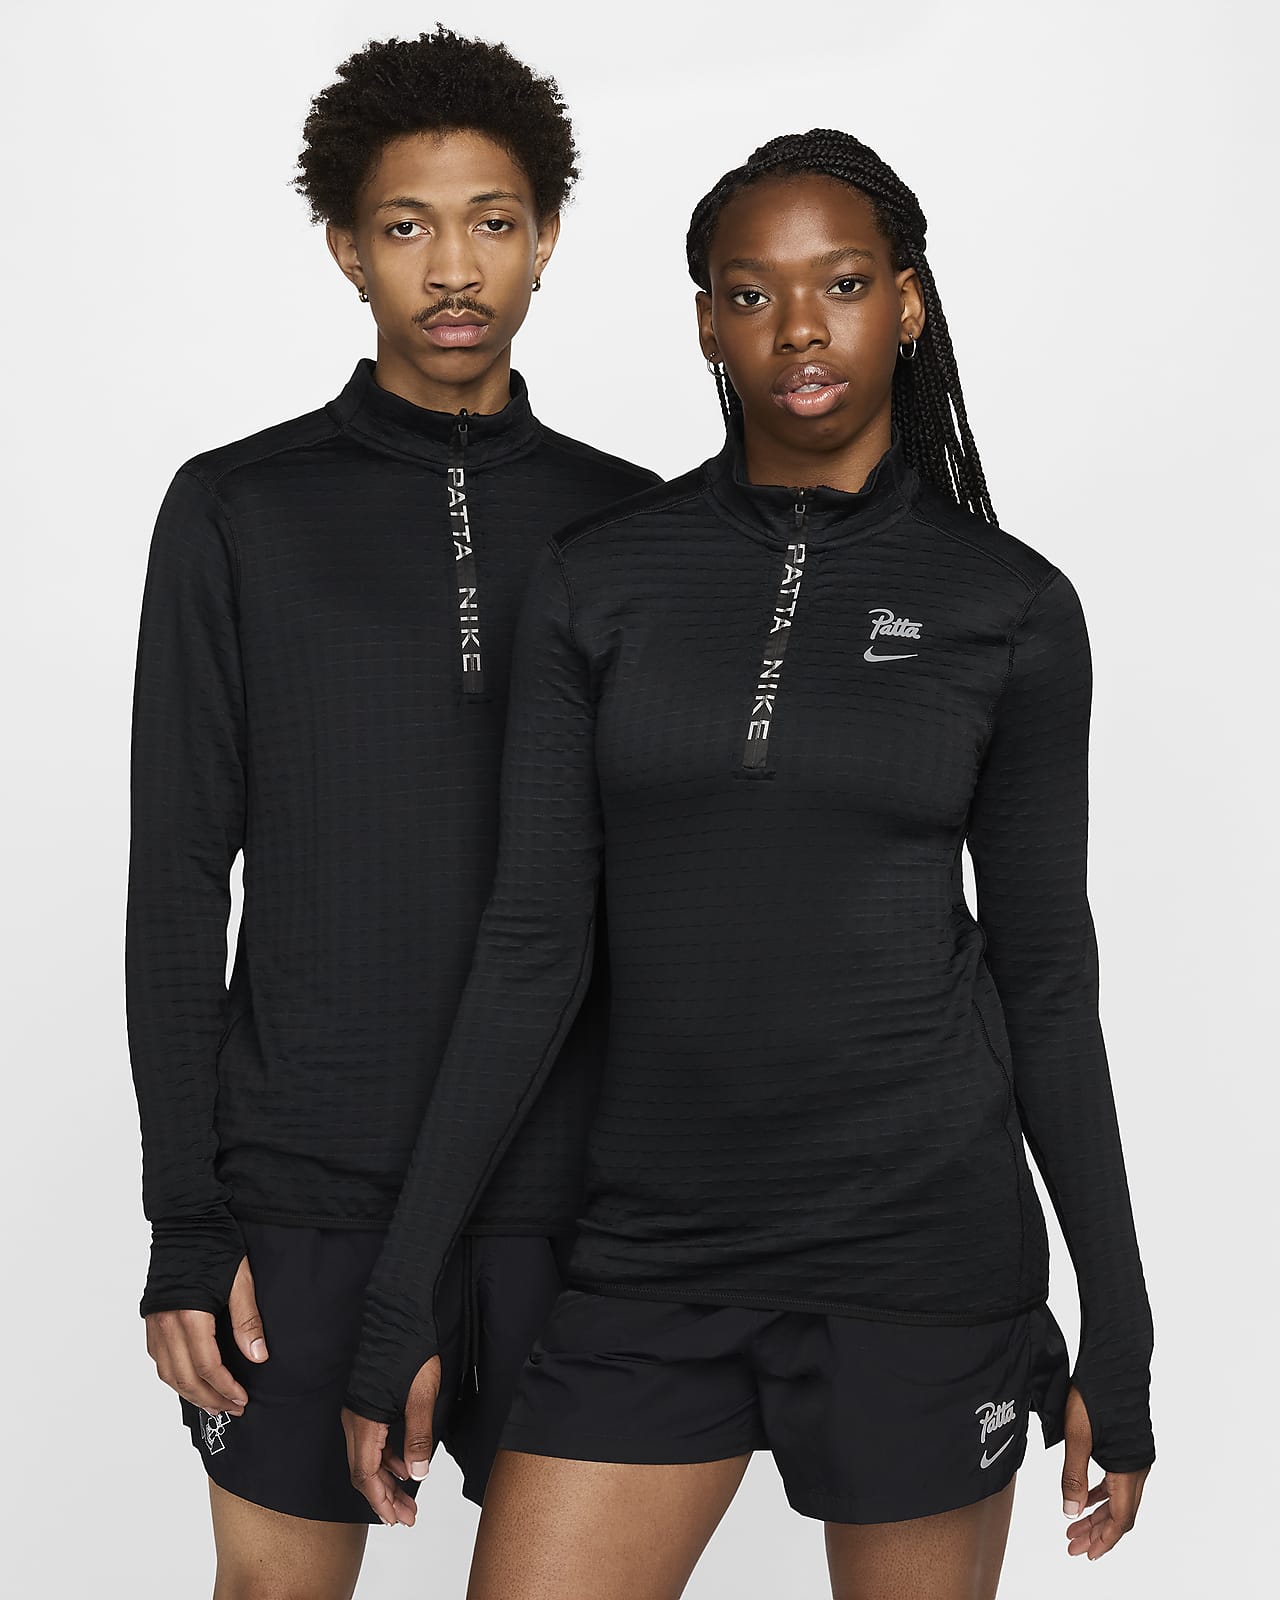 Nike x Patta Running Team Camiseta de manga larga con media cremallera